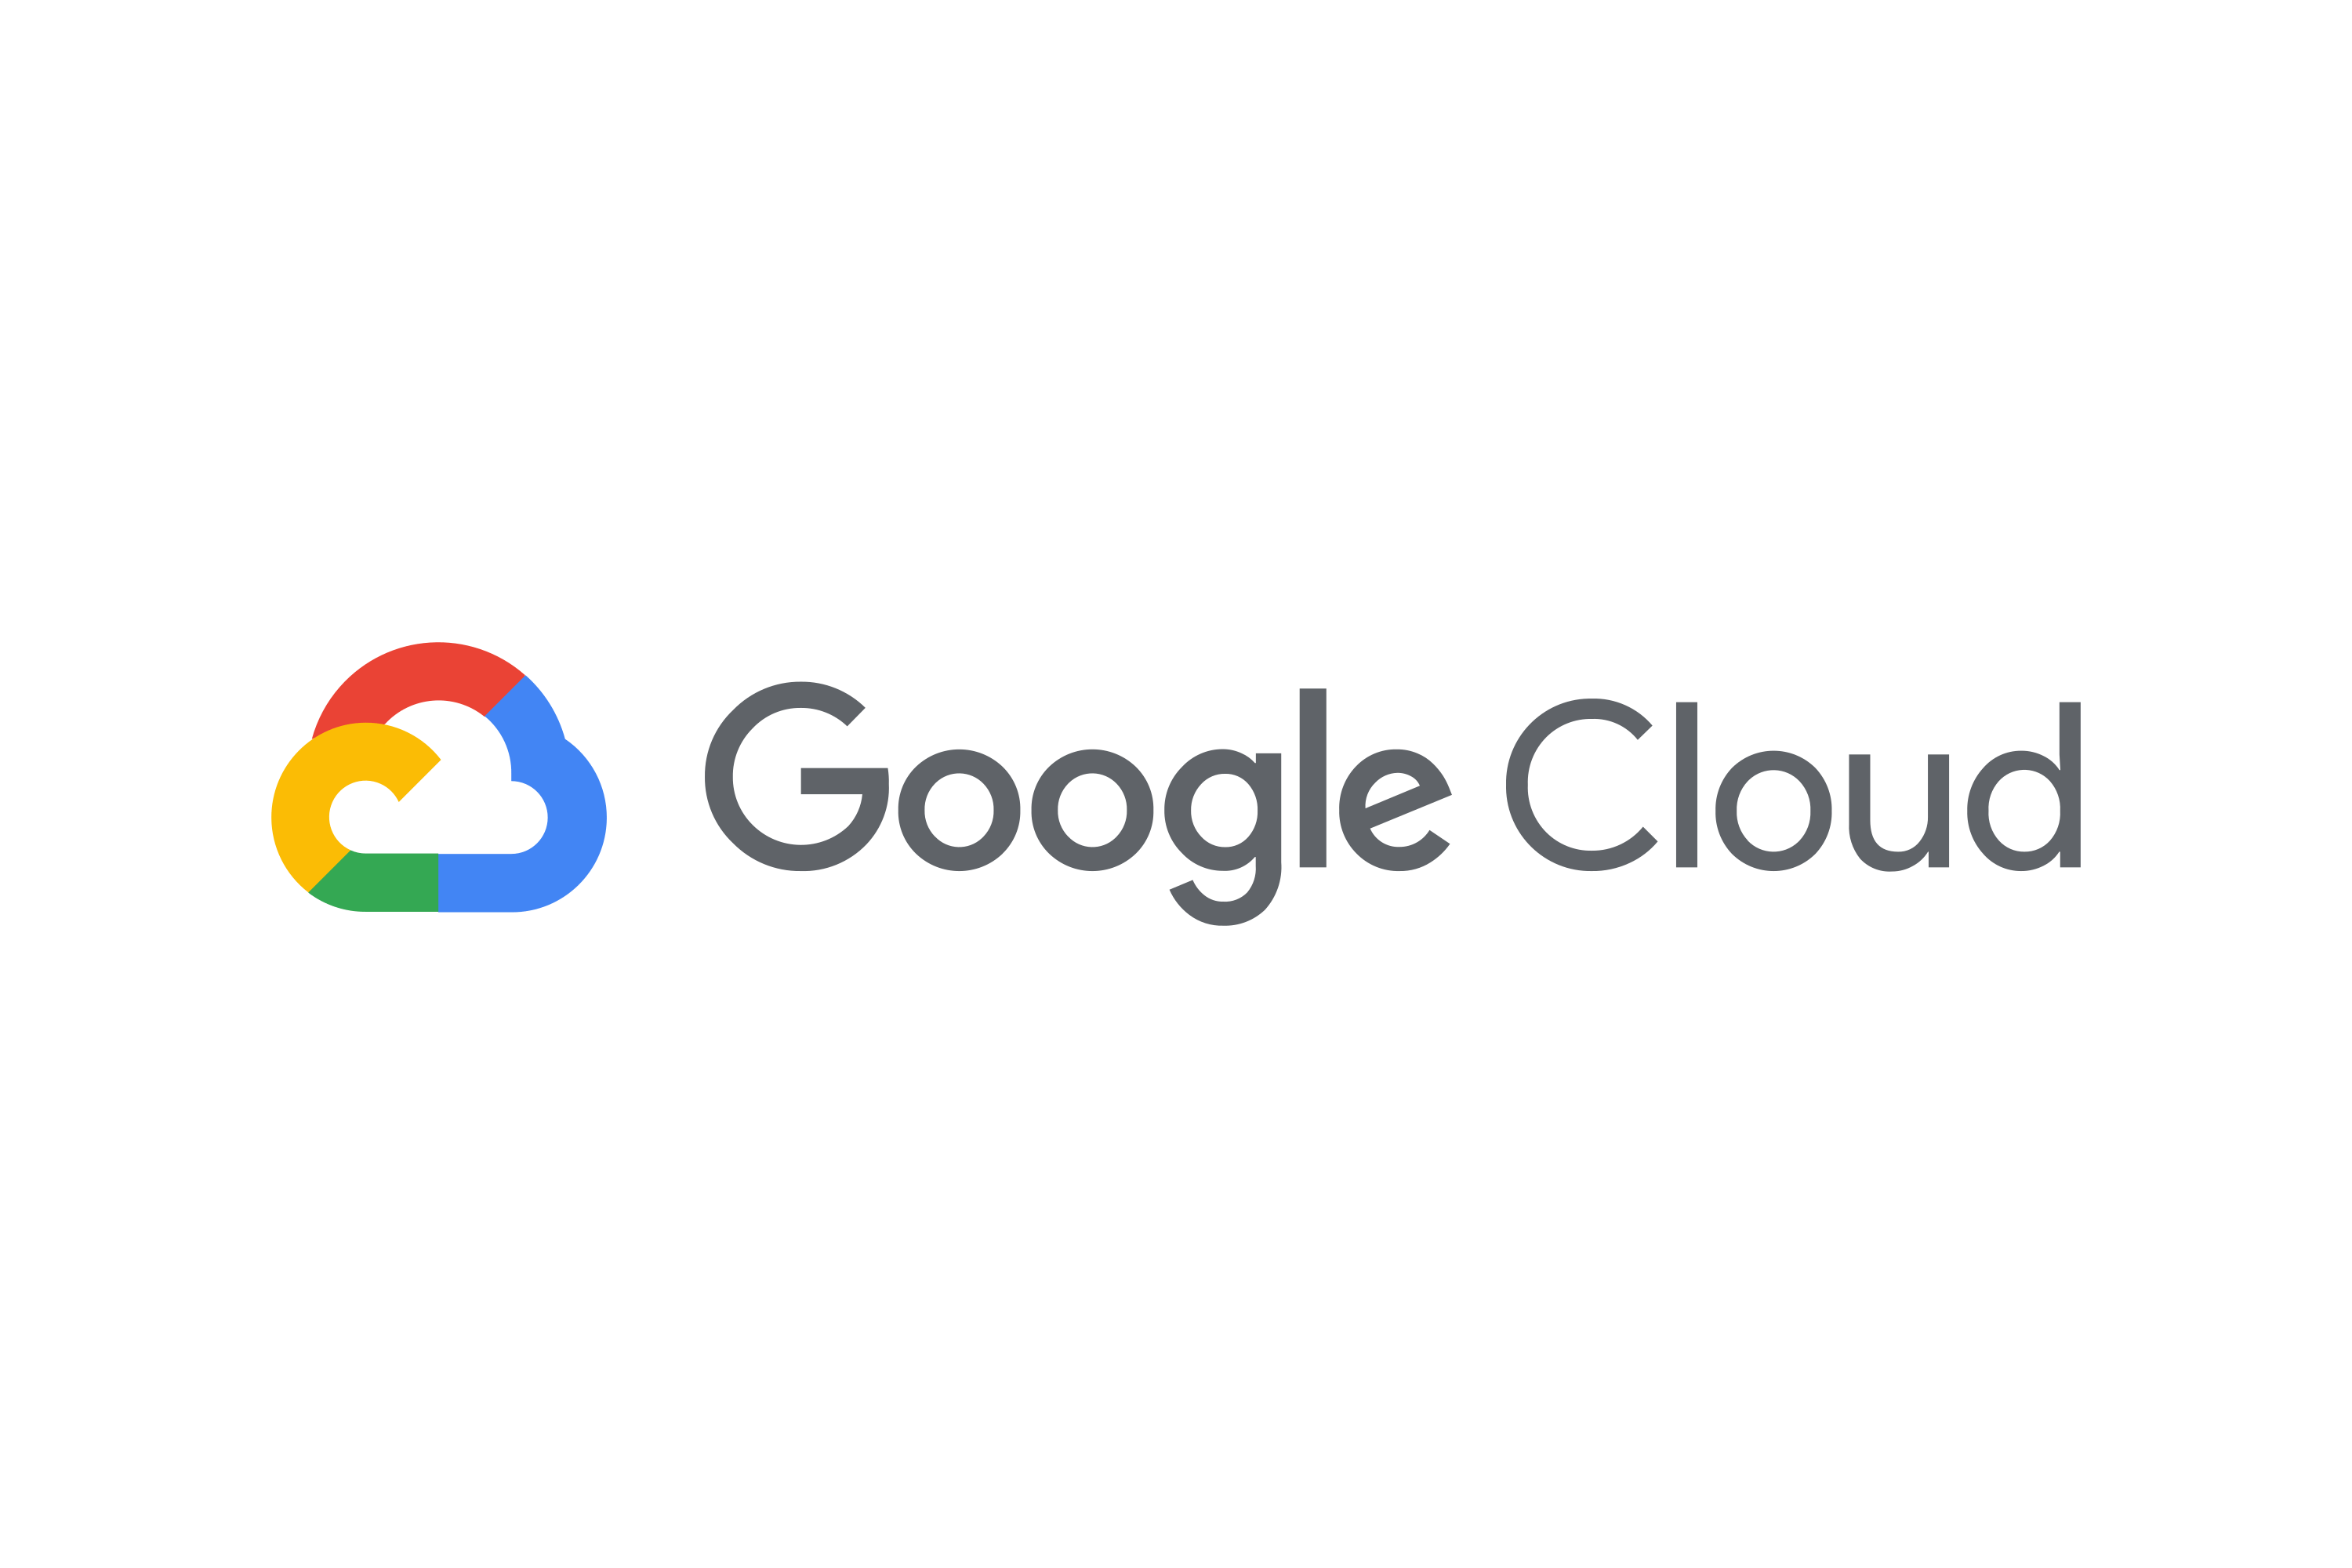 Google Cloud Logo PNG HD